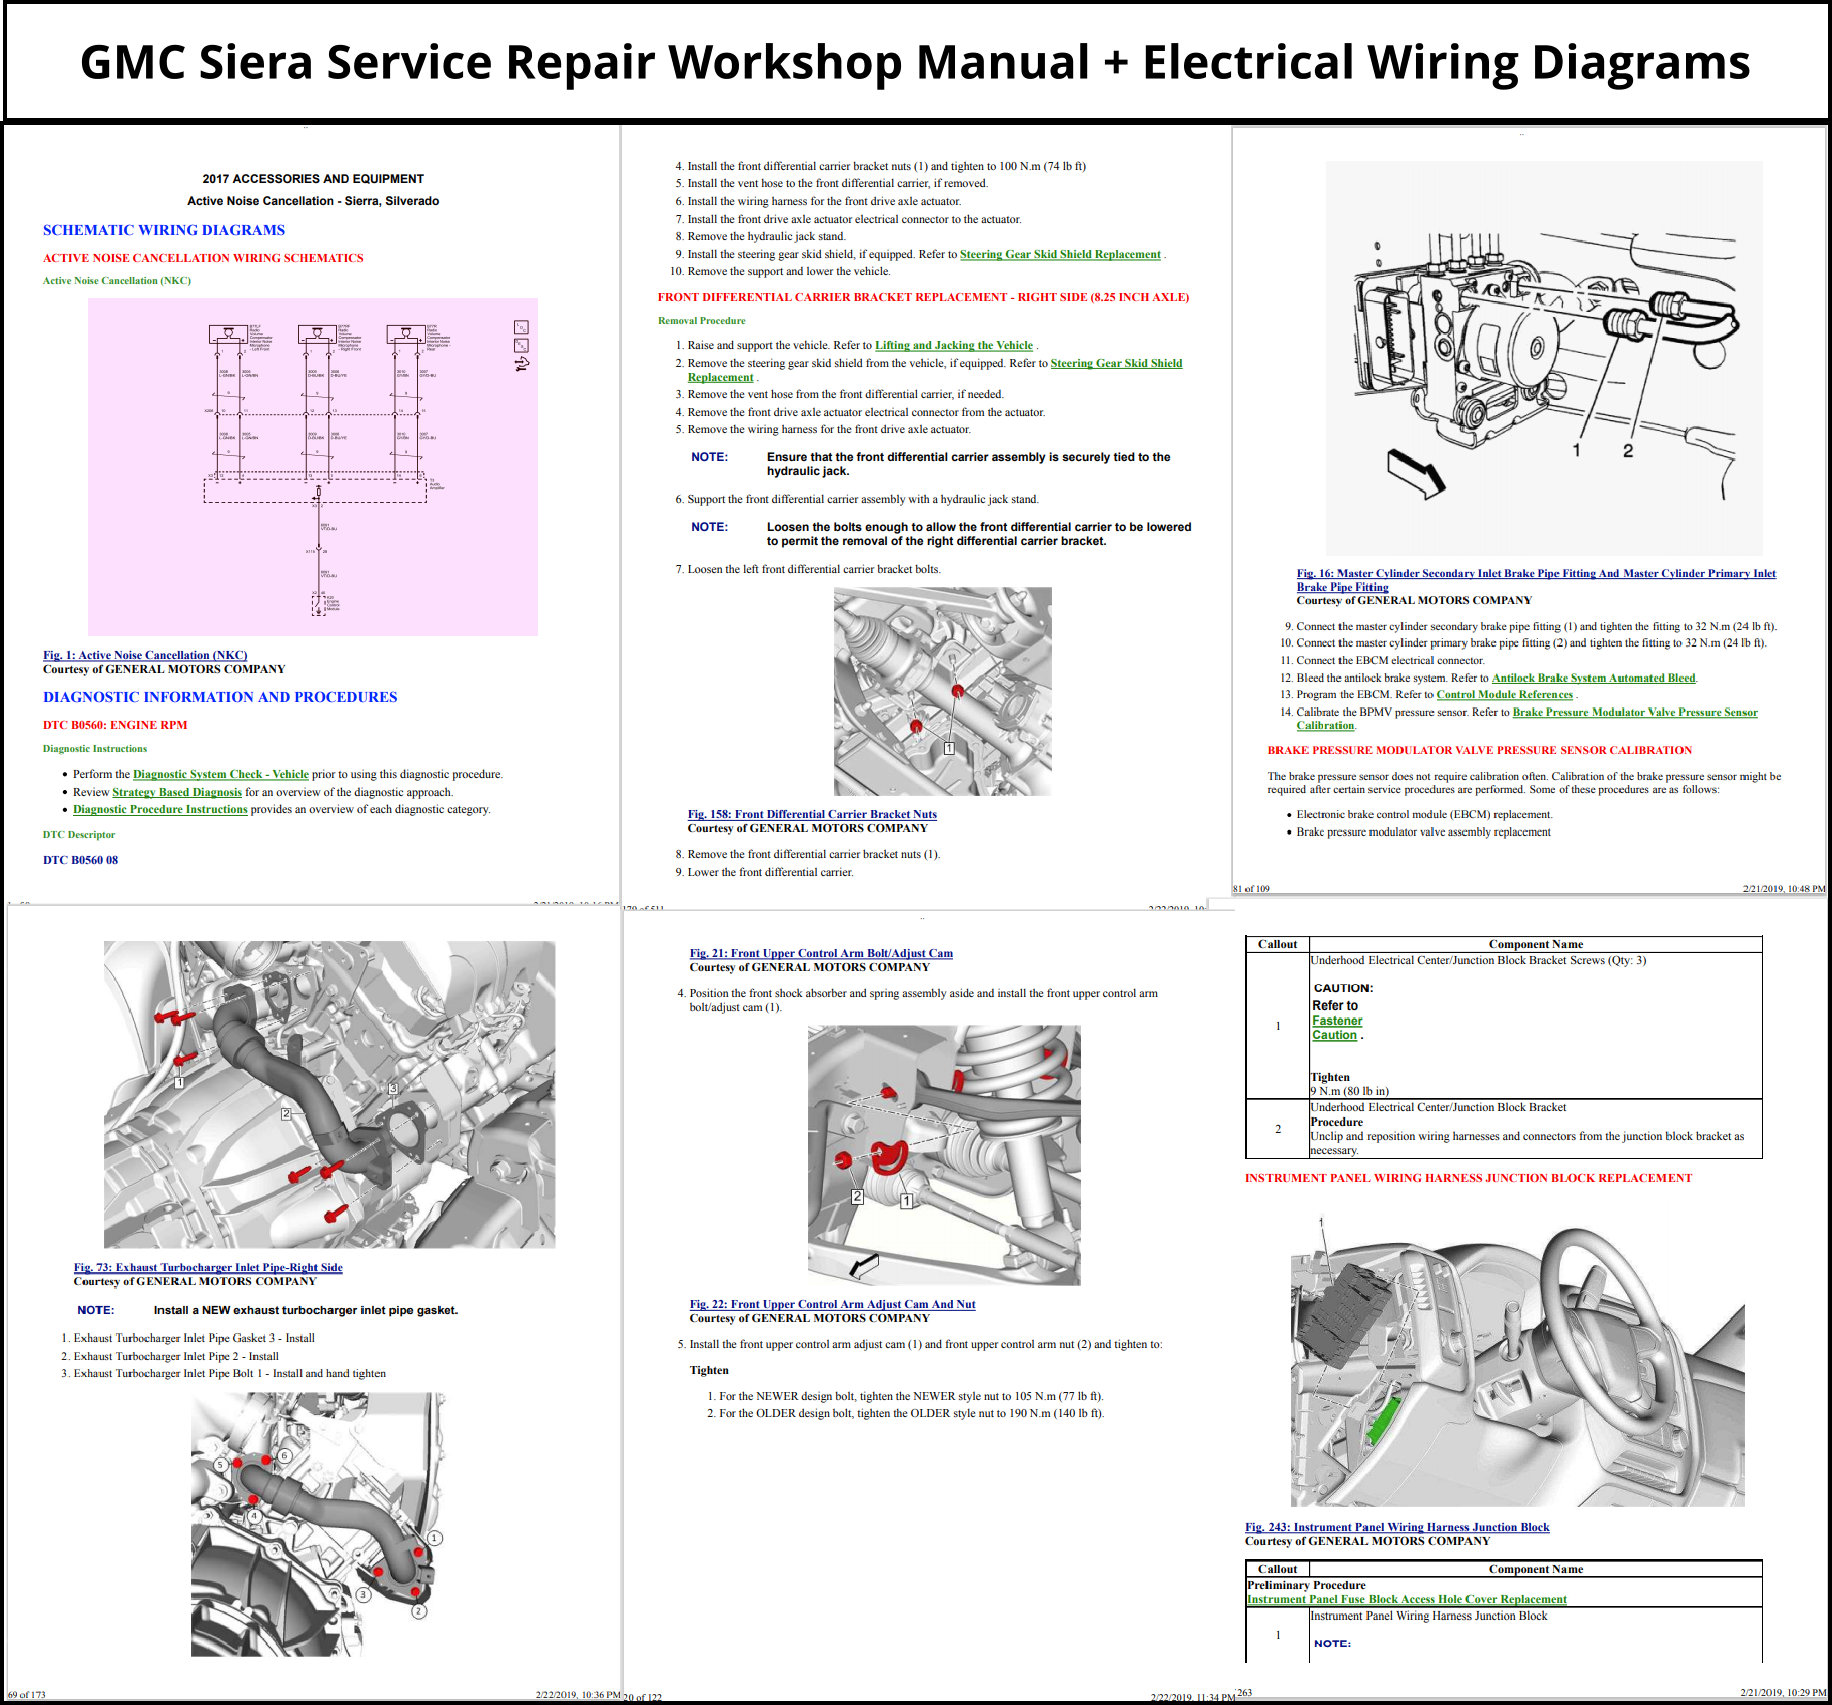 GMC Siera Service Repair Workshop Manual + Electrical Wiring Diagrams